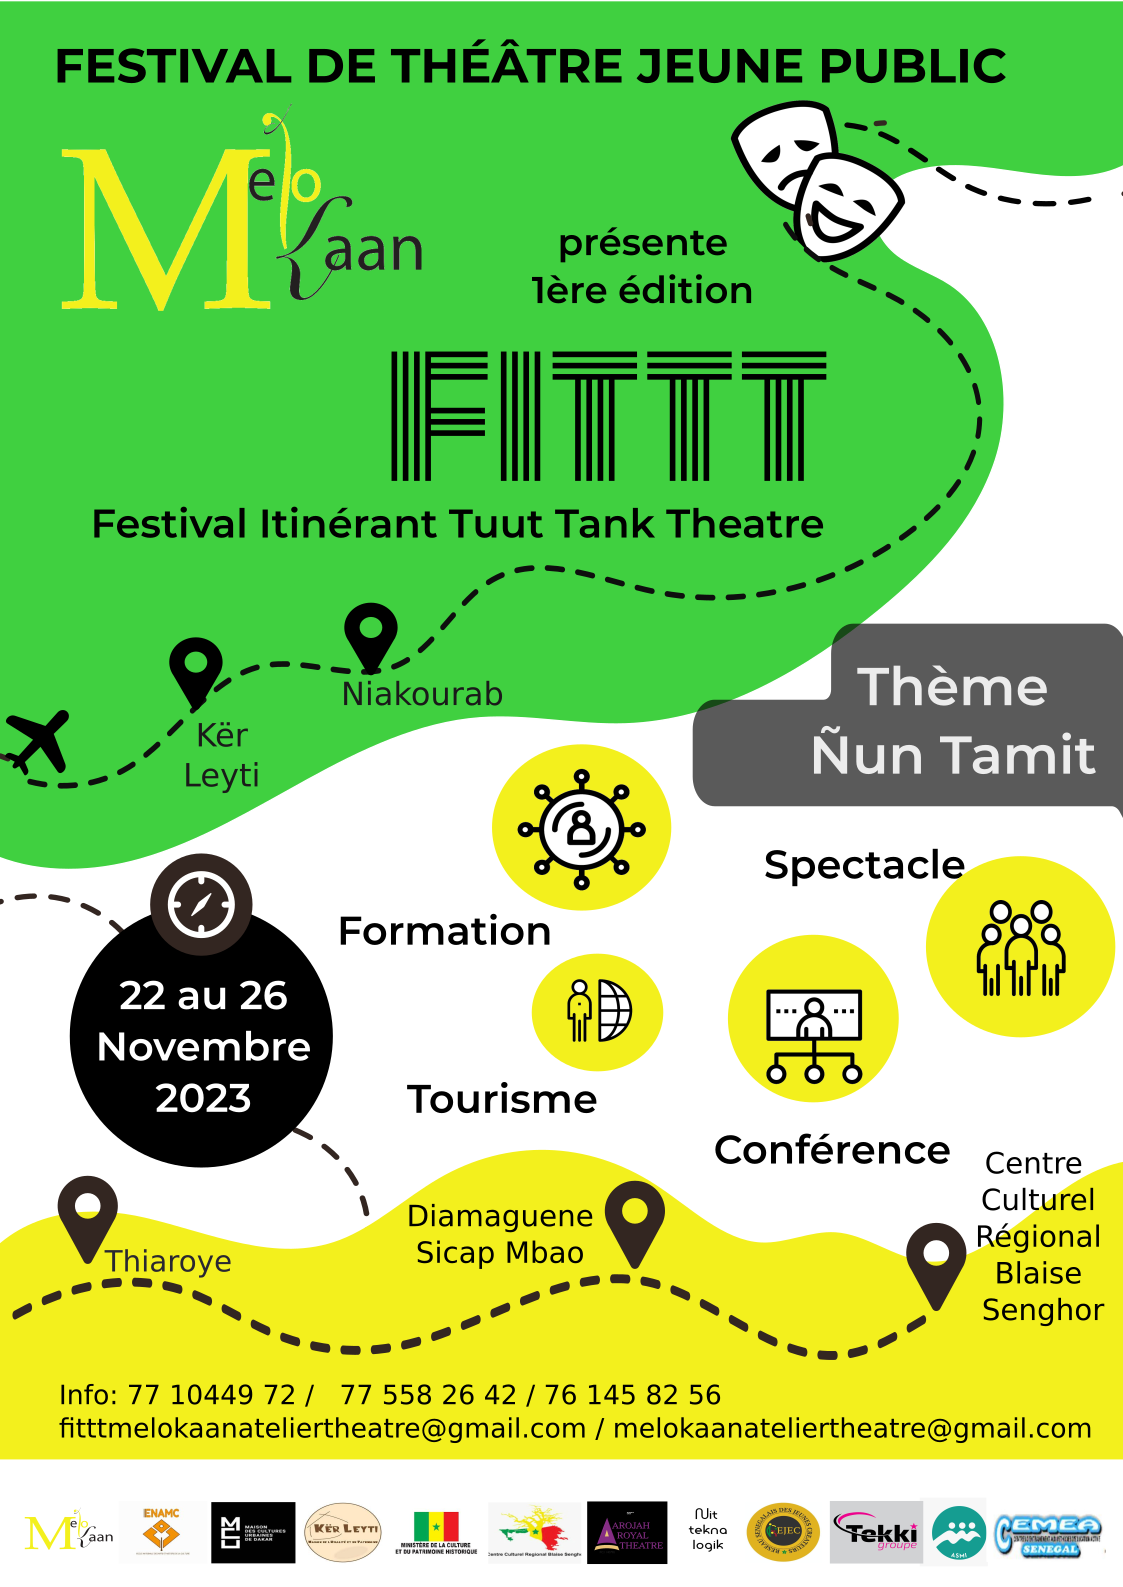 “FITTT” : Festival itinérant Tuut Tank Théâtre